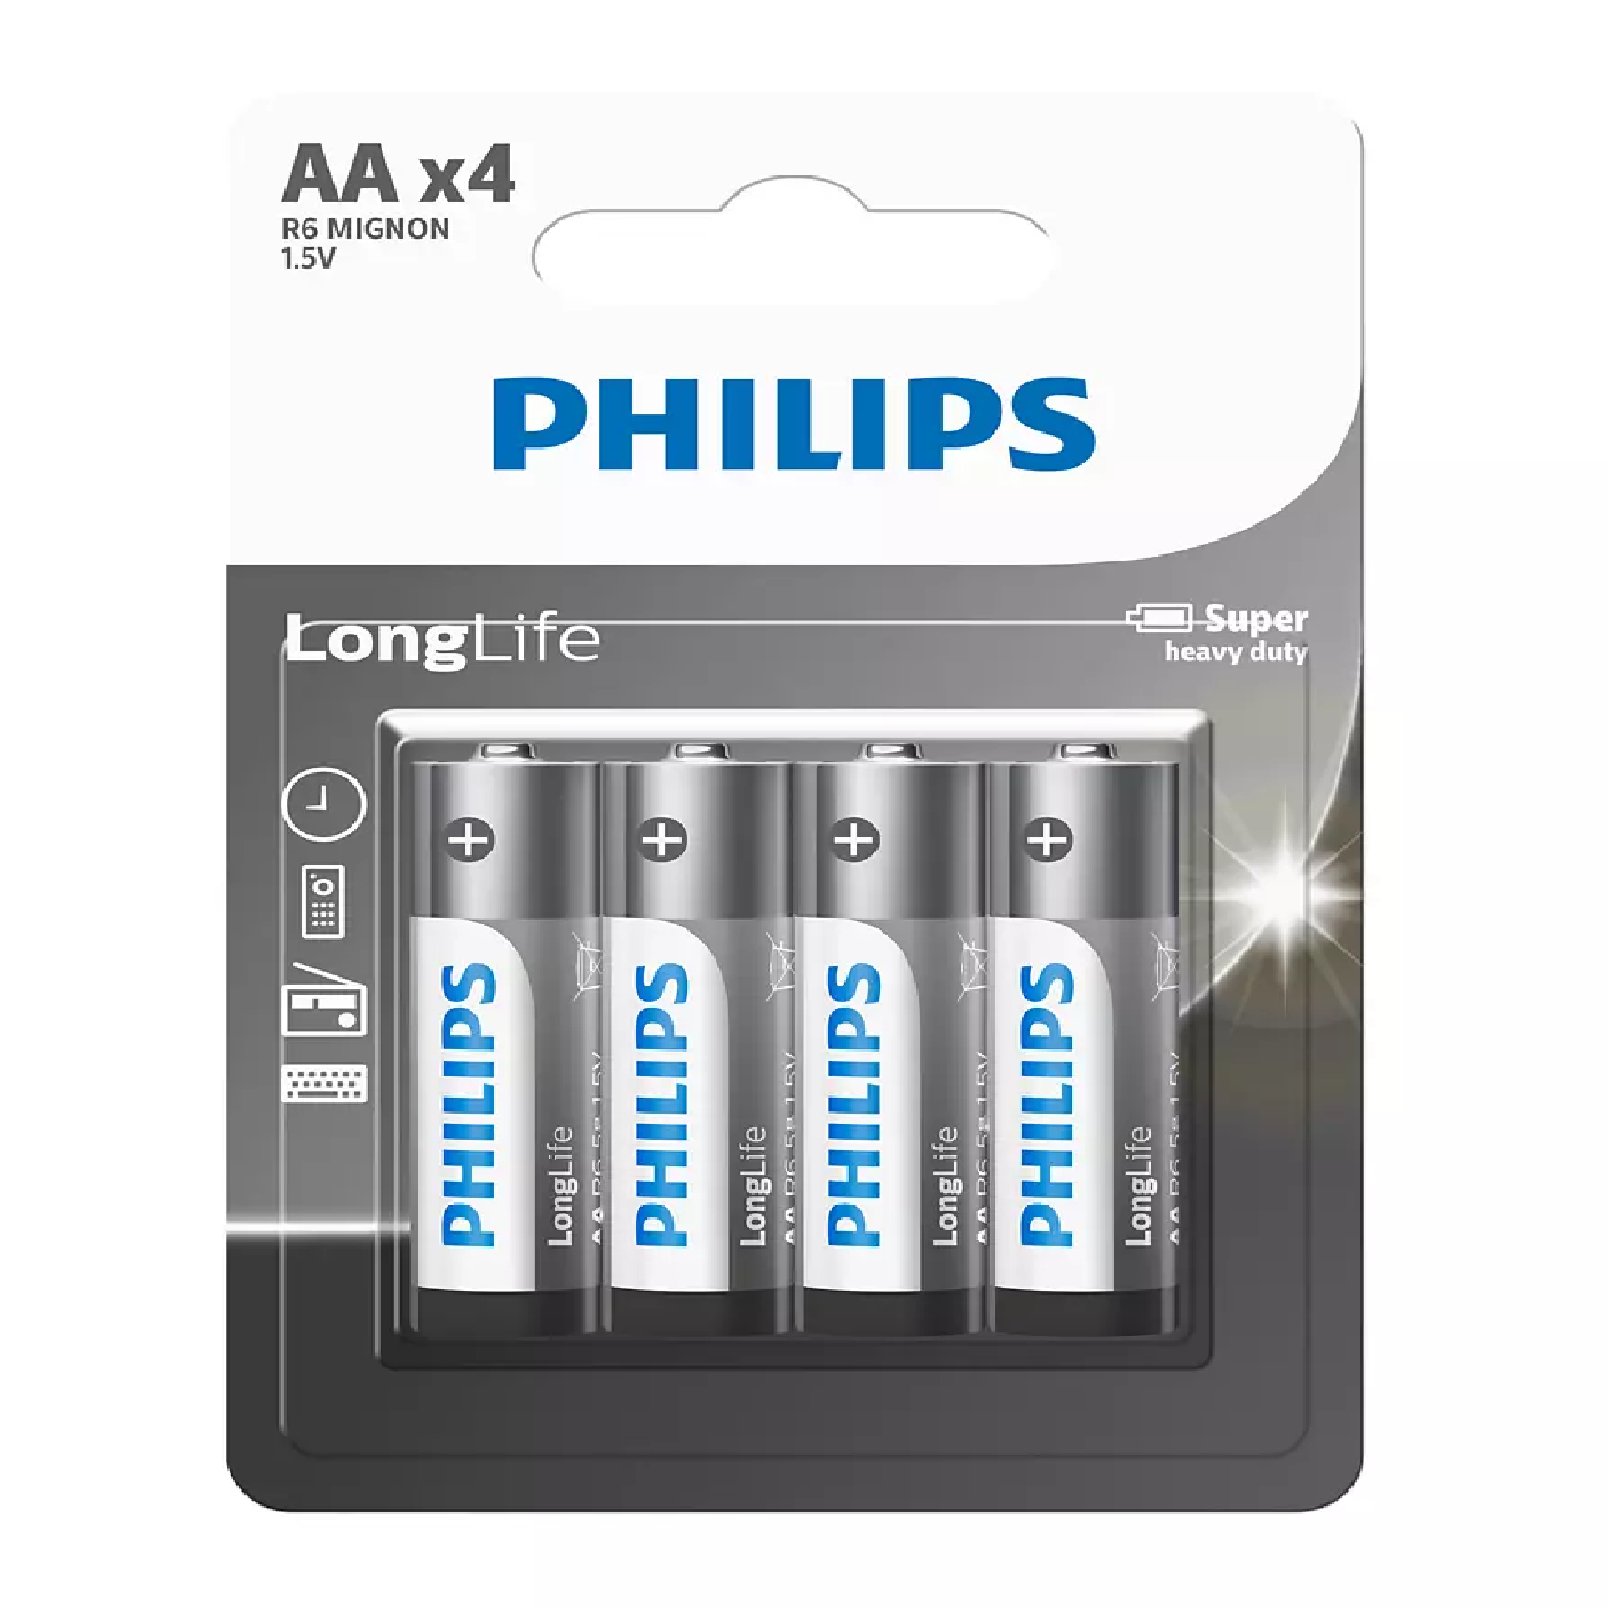 Philips 4AA LONG LIFE Zinc Chloride Battery 4PC/PACK